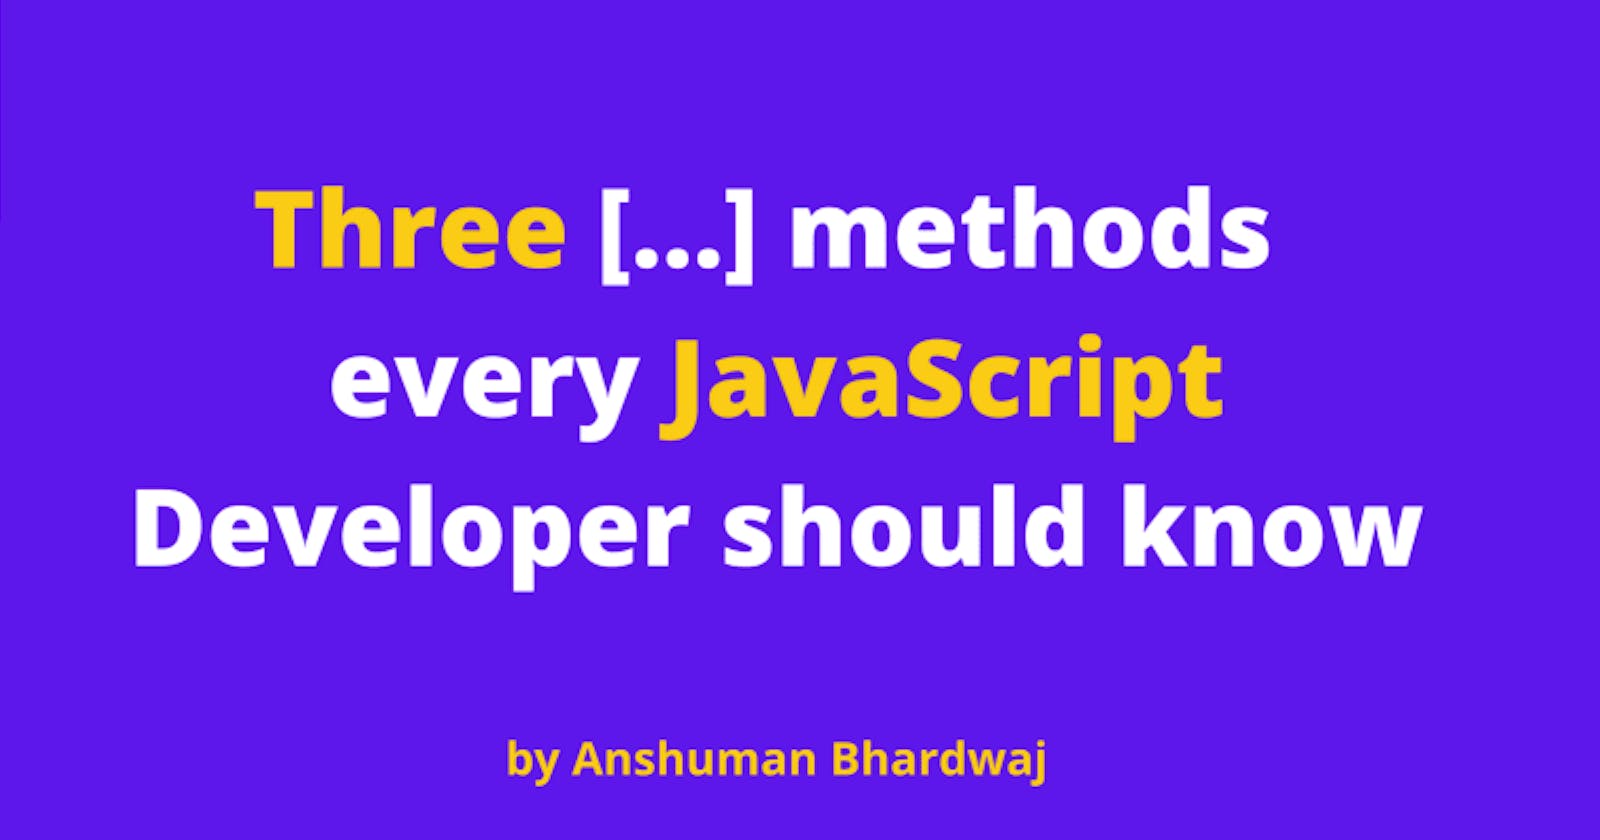 3 Array methods every JavaScript developer should know